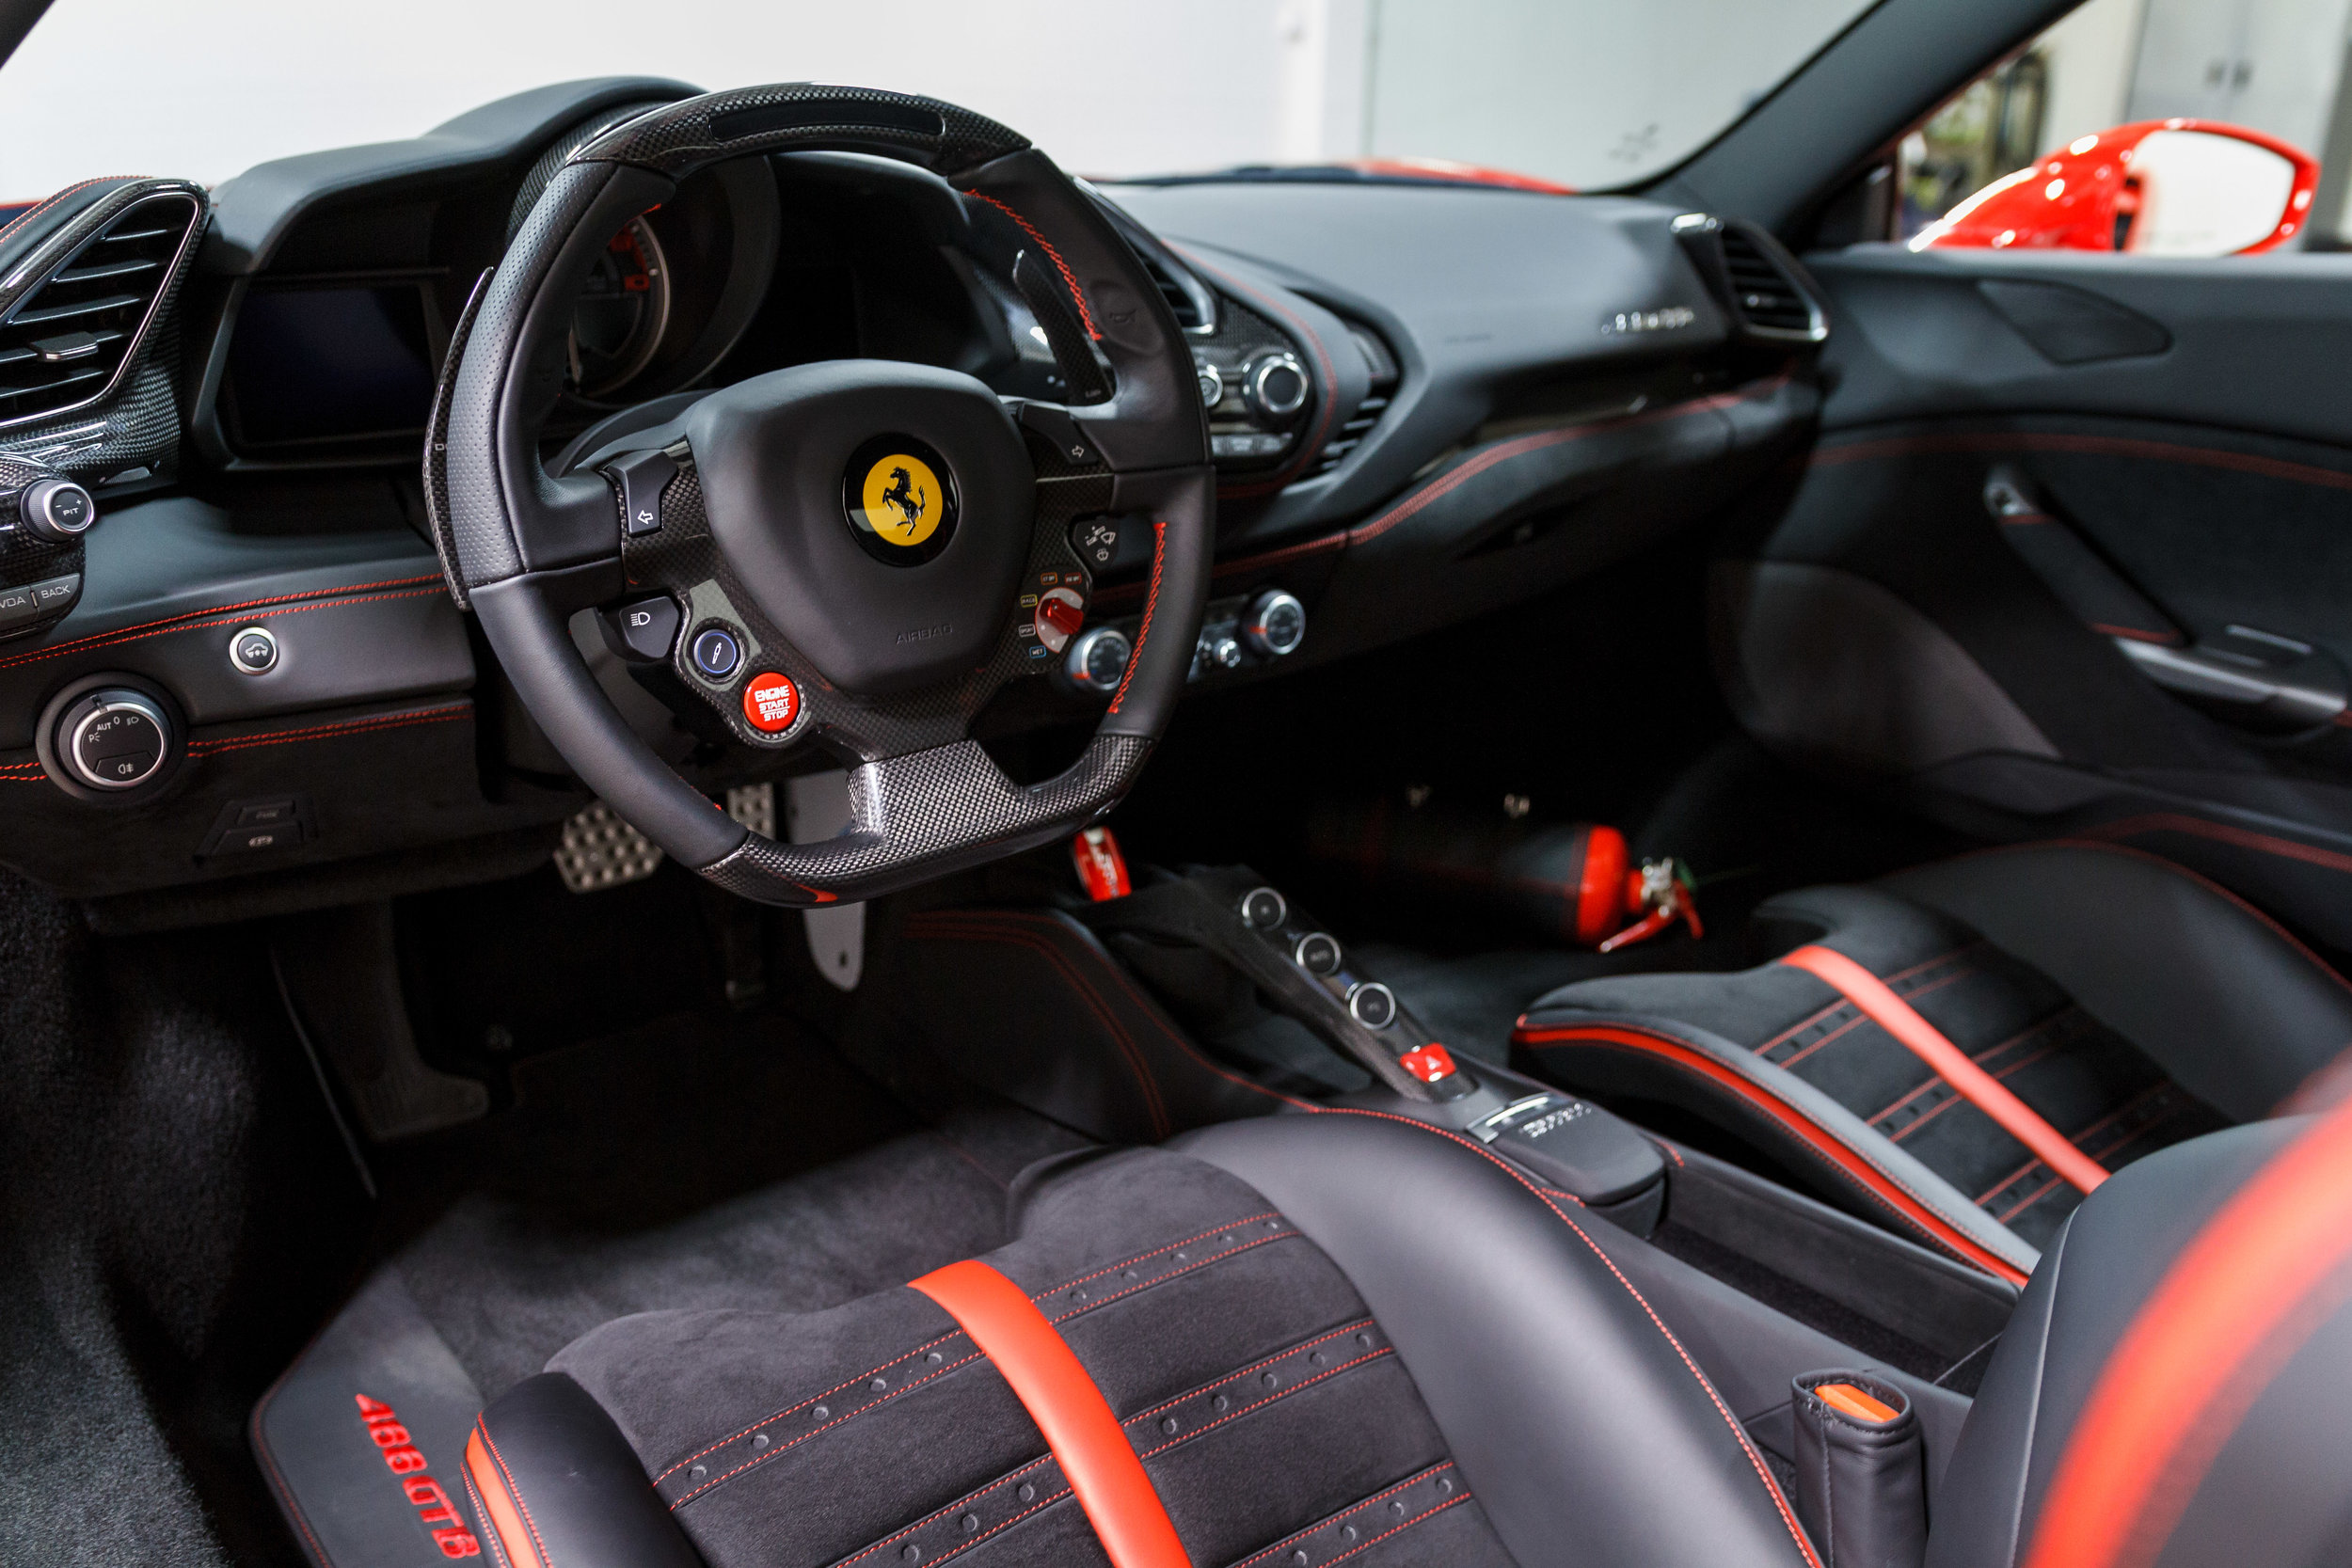 Used 2017 Ferrari 488 GTB For Sale ($269,900) | Marino Performance Motors  Stock #226973